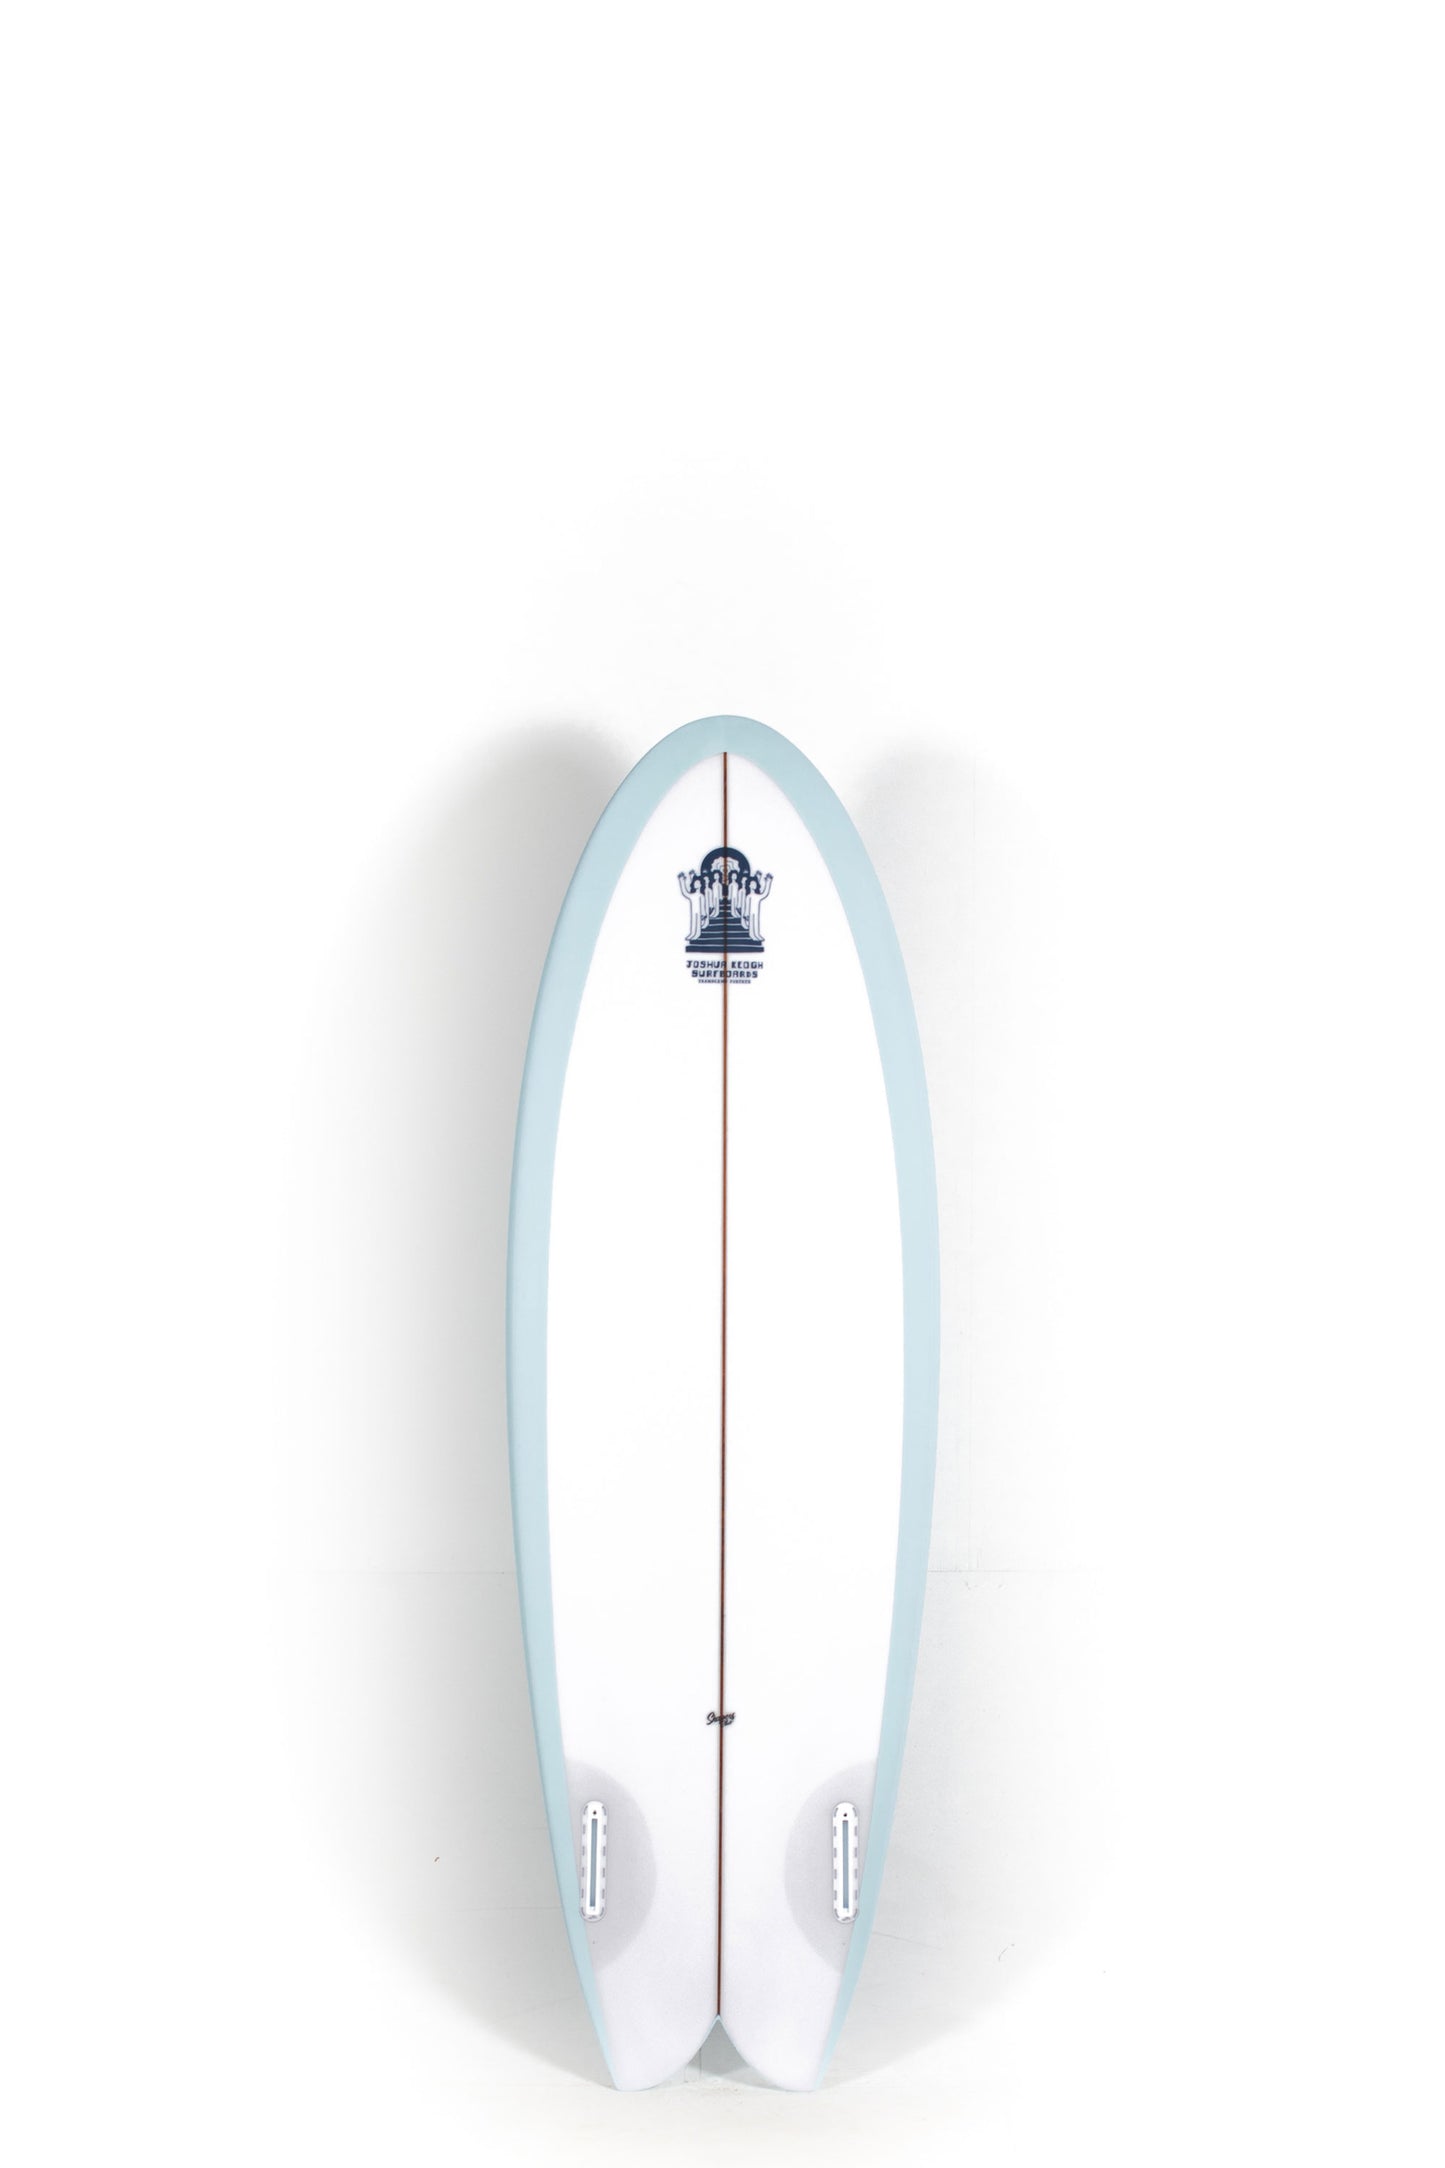 JOSHUA KEOGH SURFBOARDS | Shop at PUKAS SURF SHOP